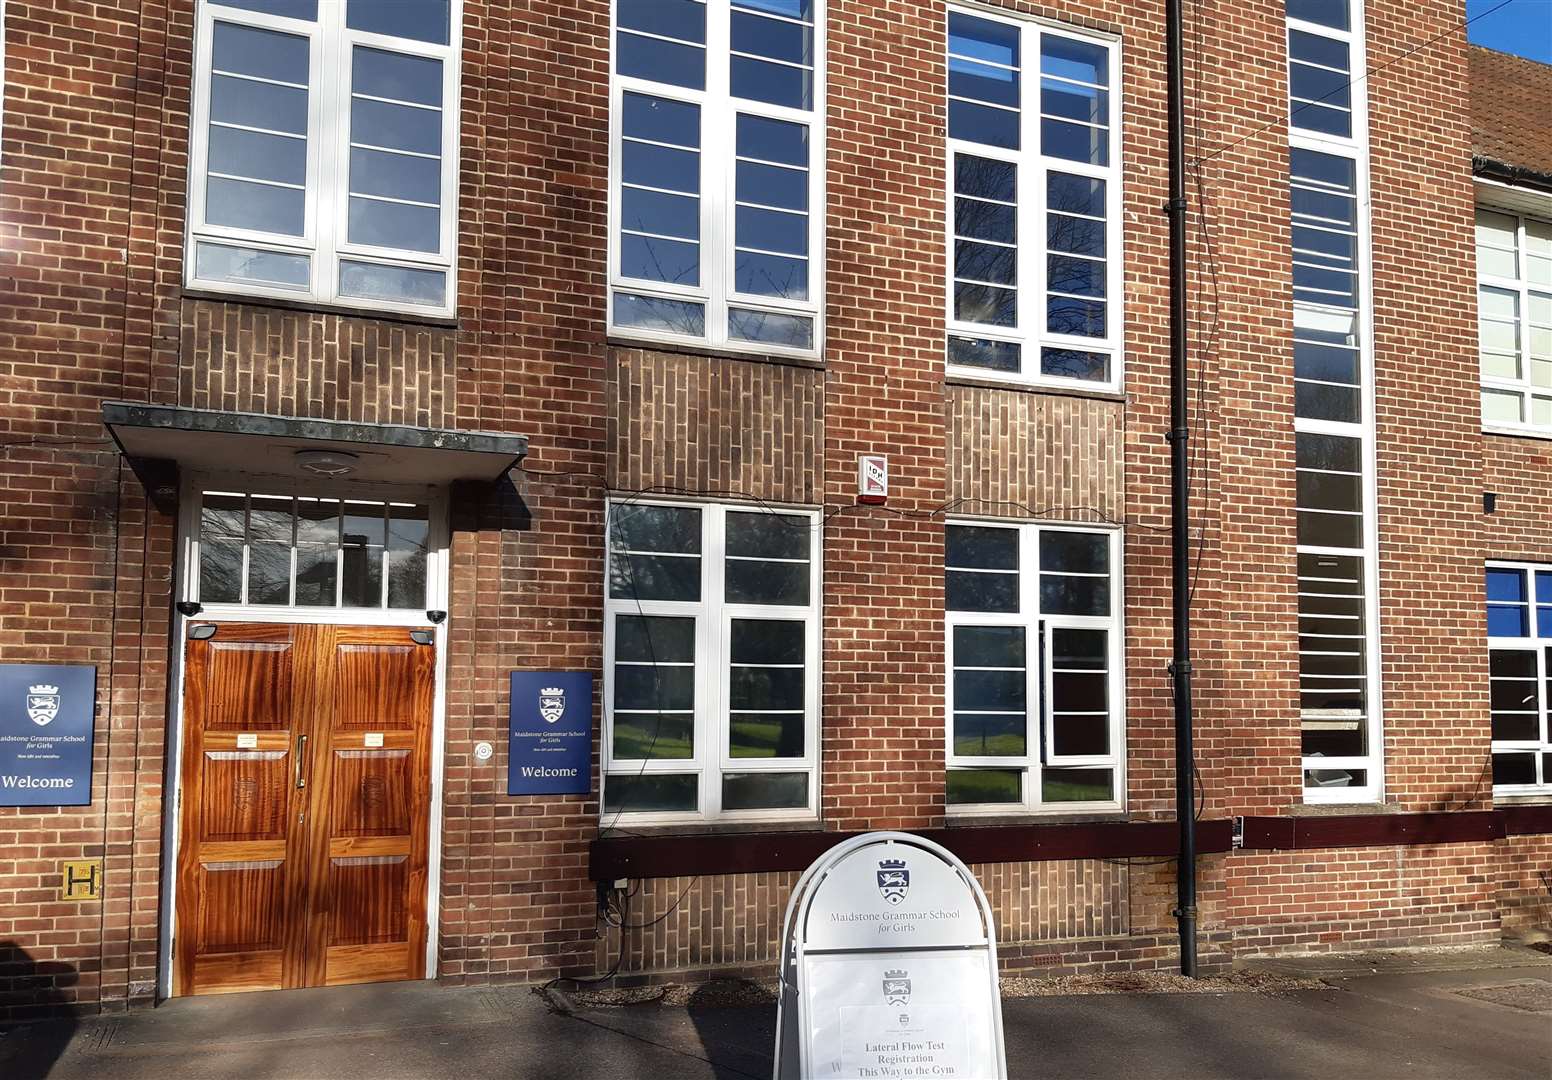 Maidstone Grammar School for Girls, in Buckland Road, Maidstone